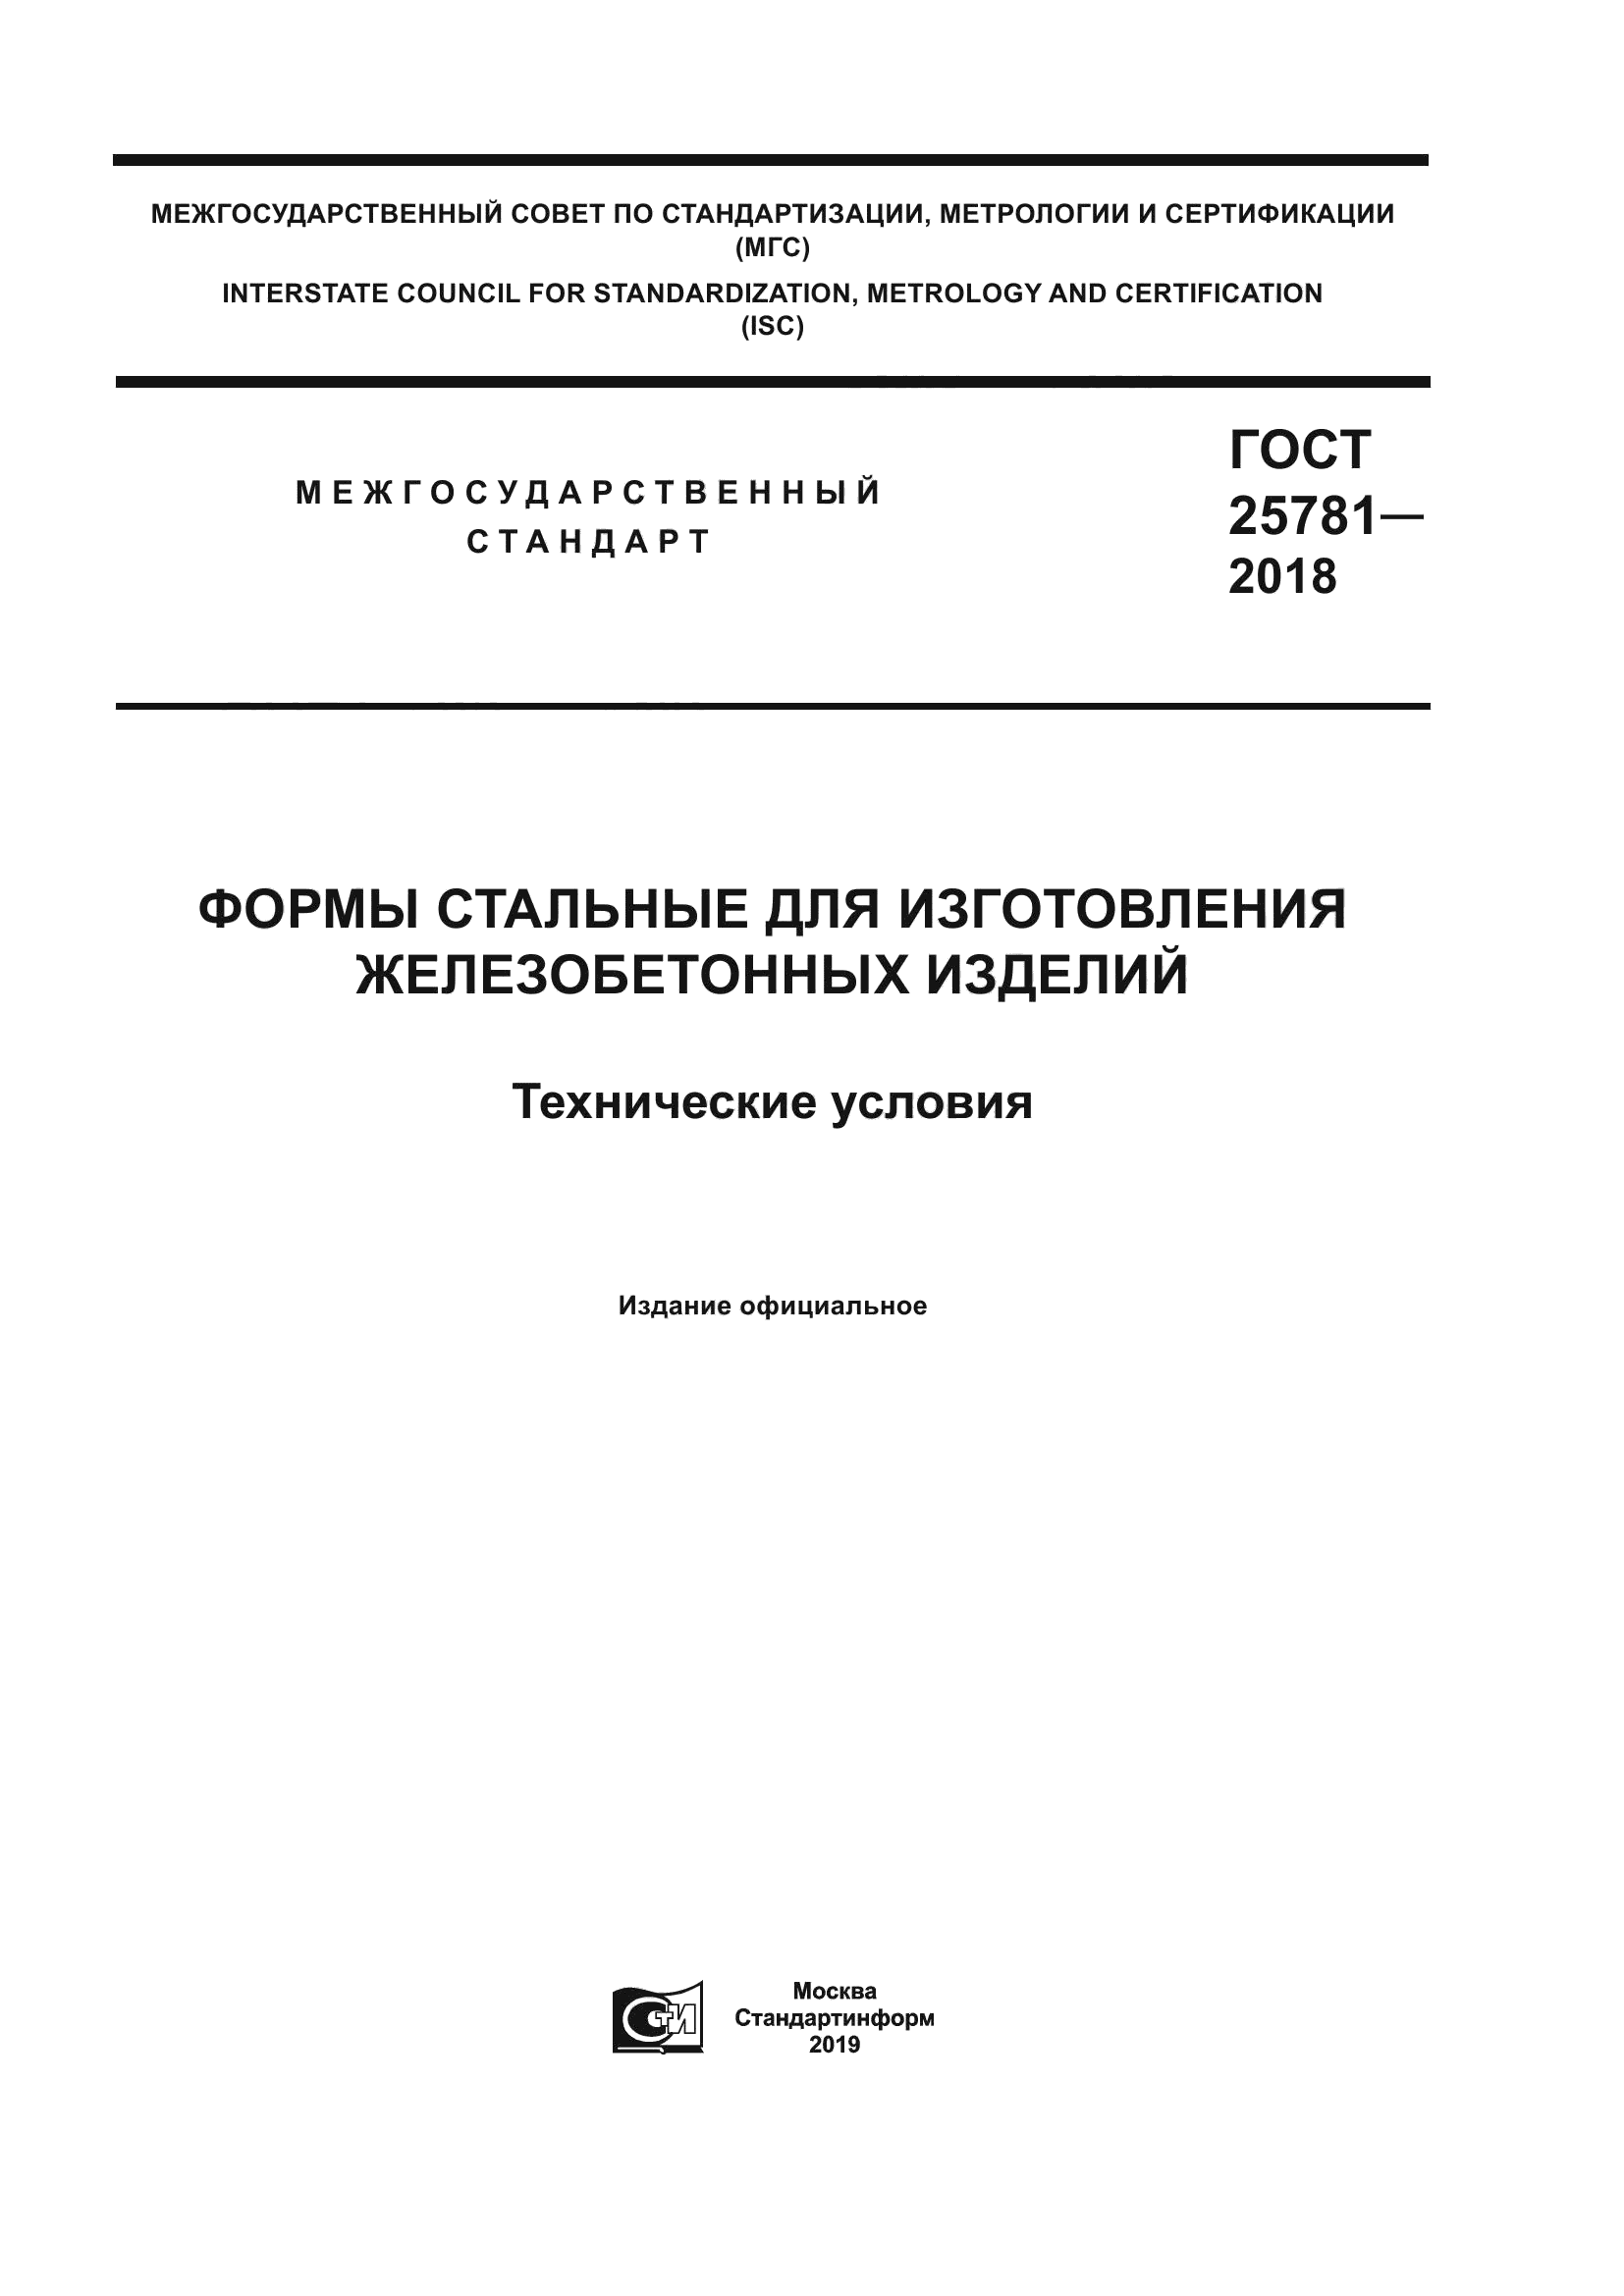 ГОСТ 25781-2018